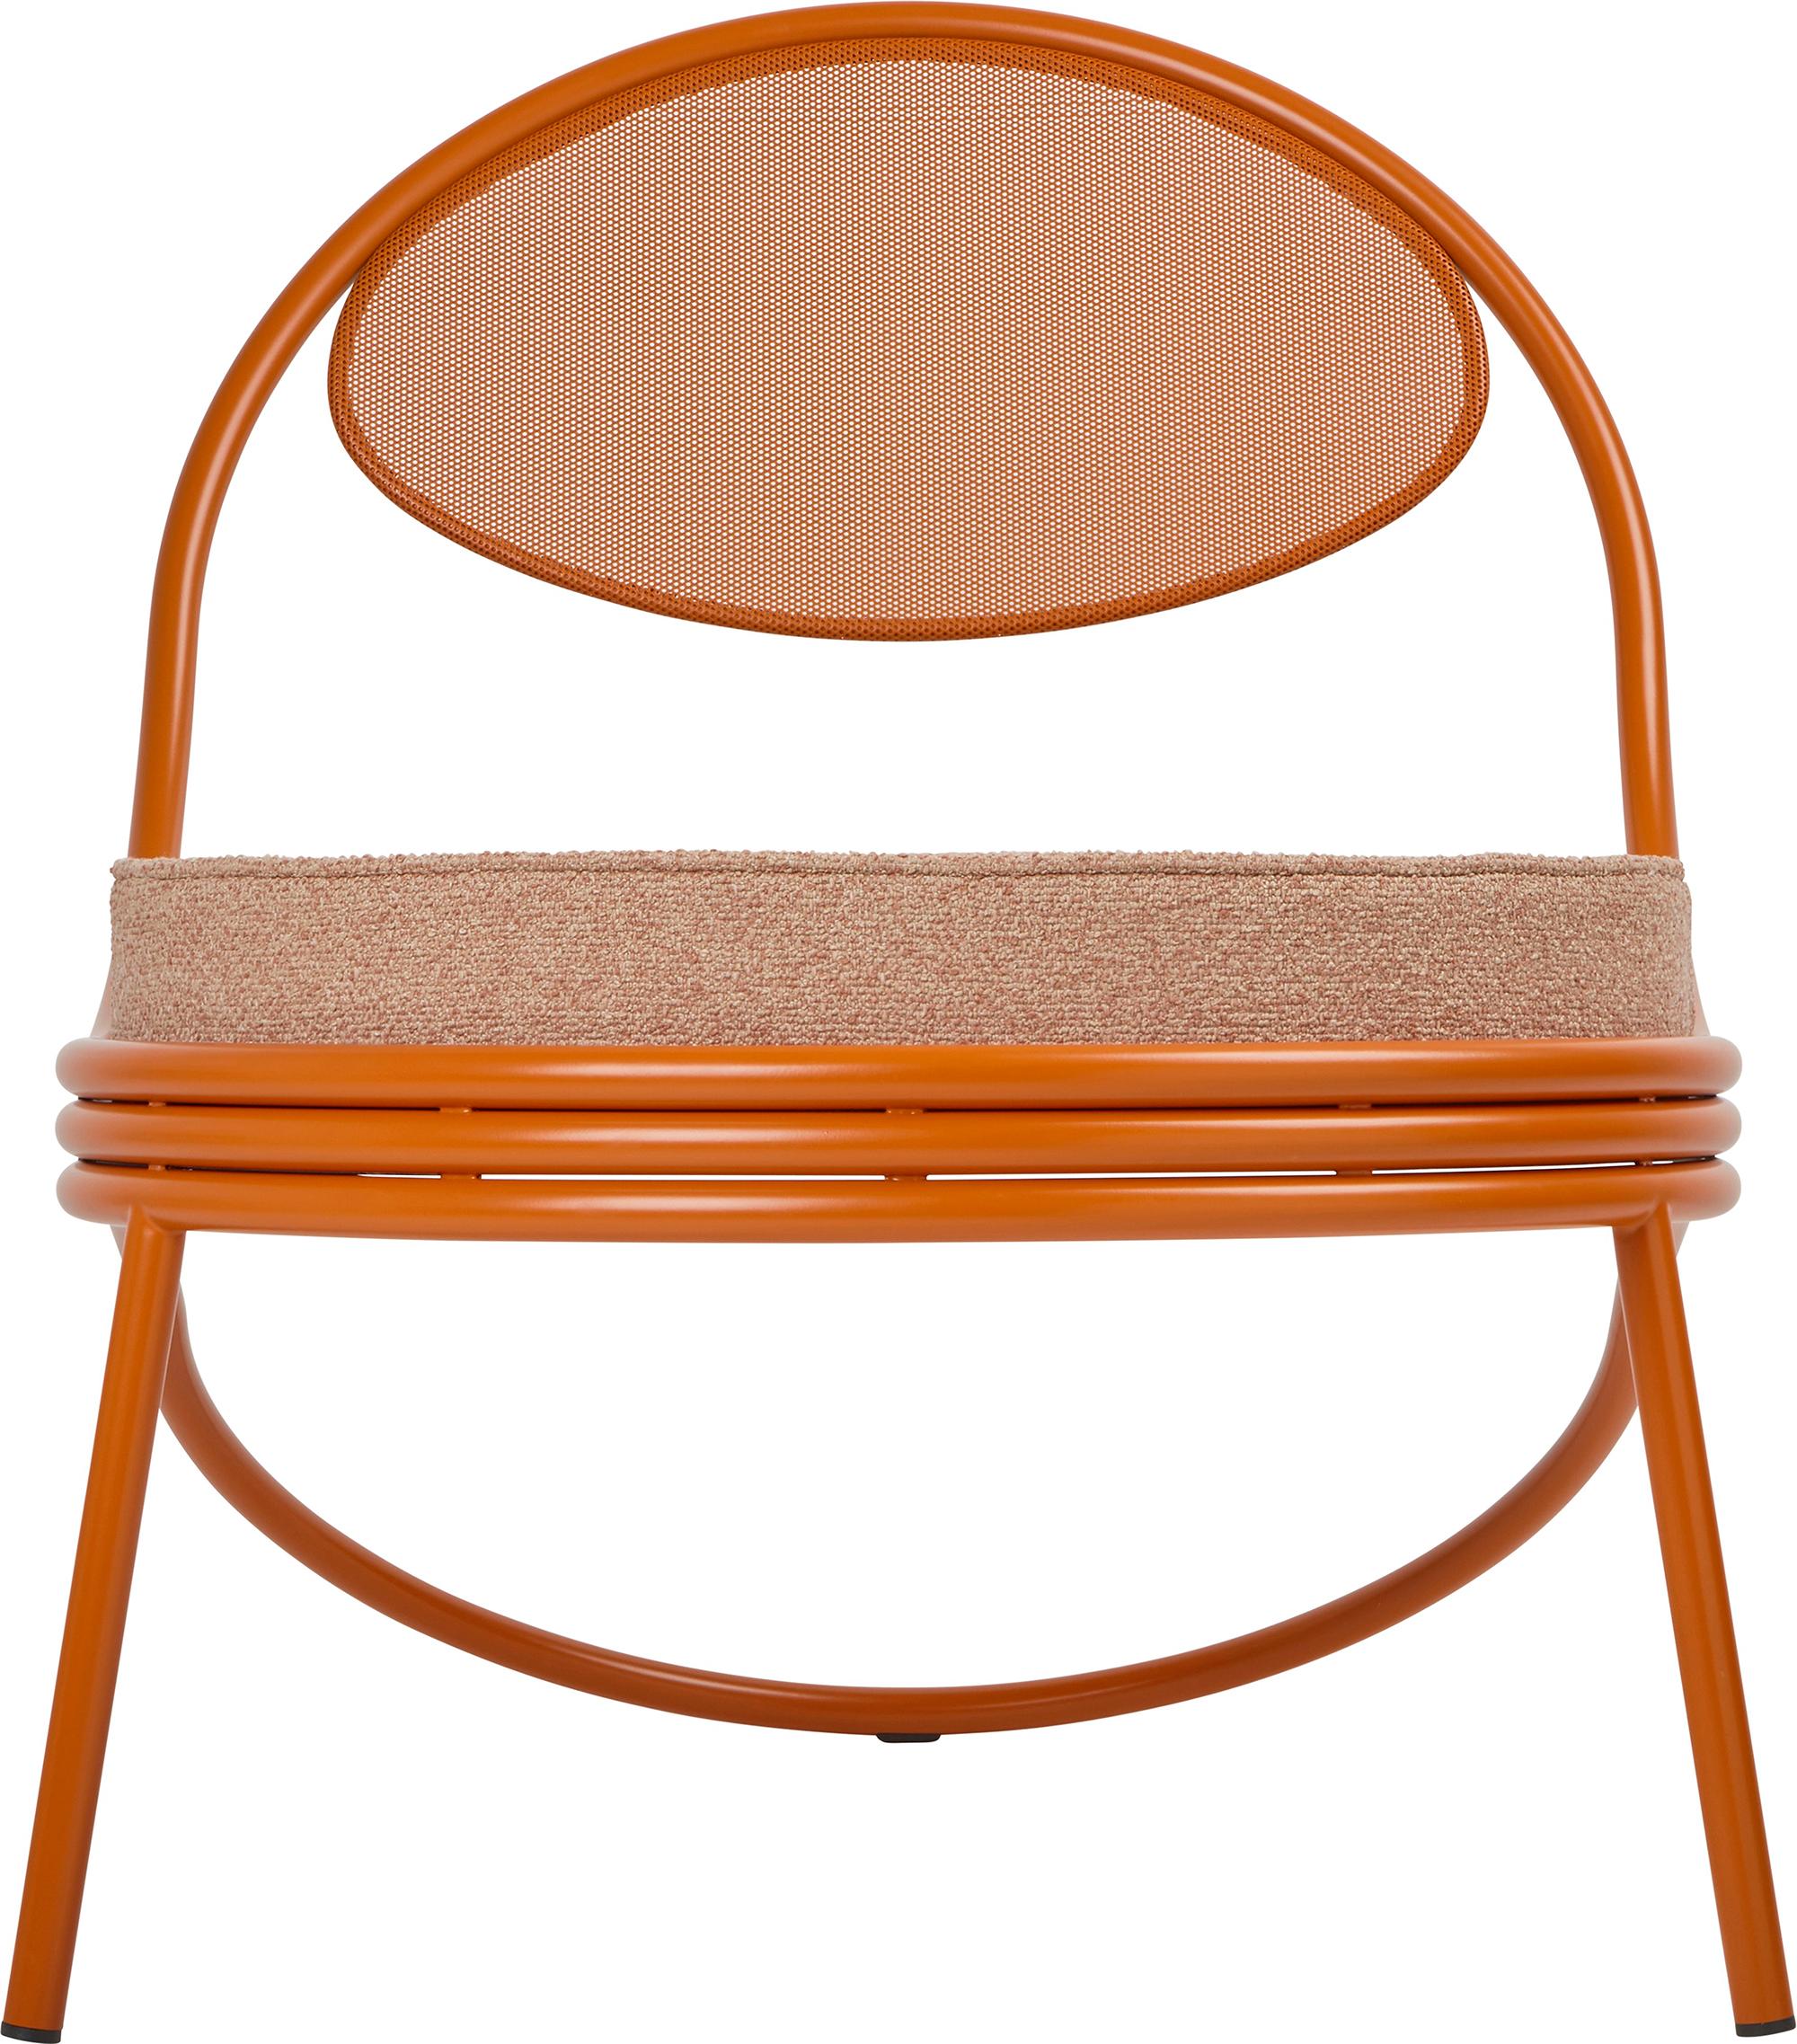 'Copacabana' Indoor Outdoor Lounge Chair by Mathieu Matégot in Leslie Fabric For Sale 5